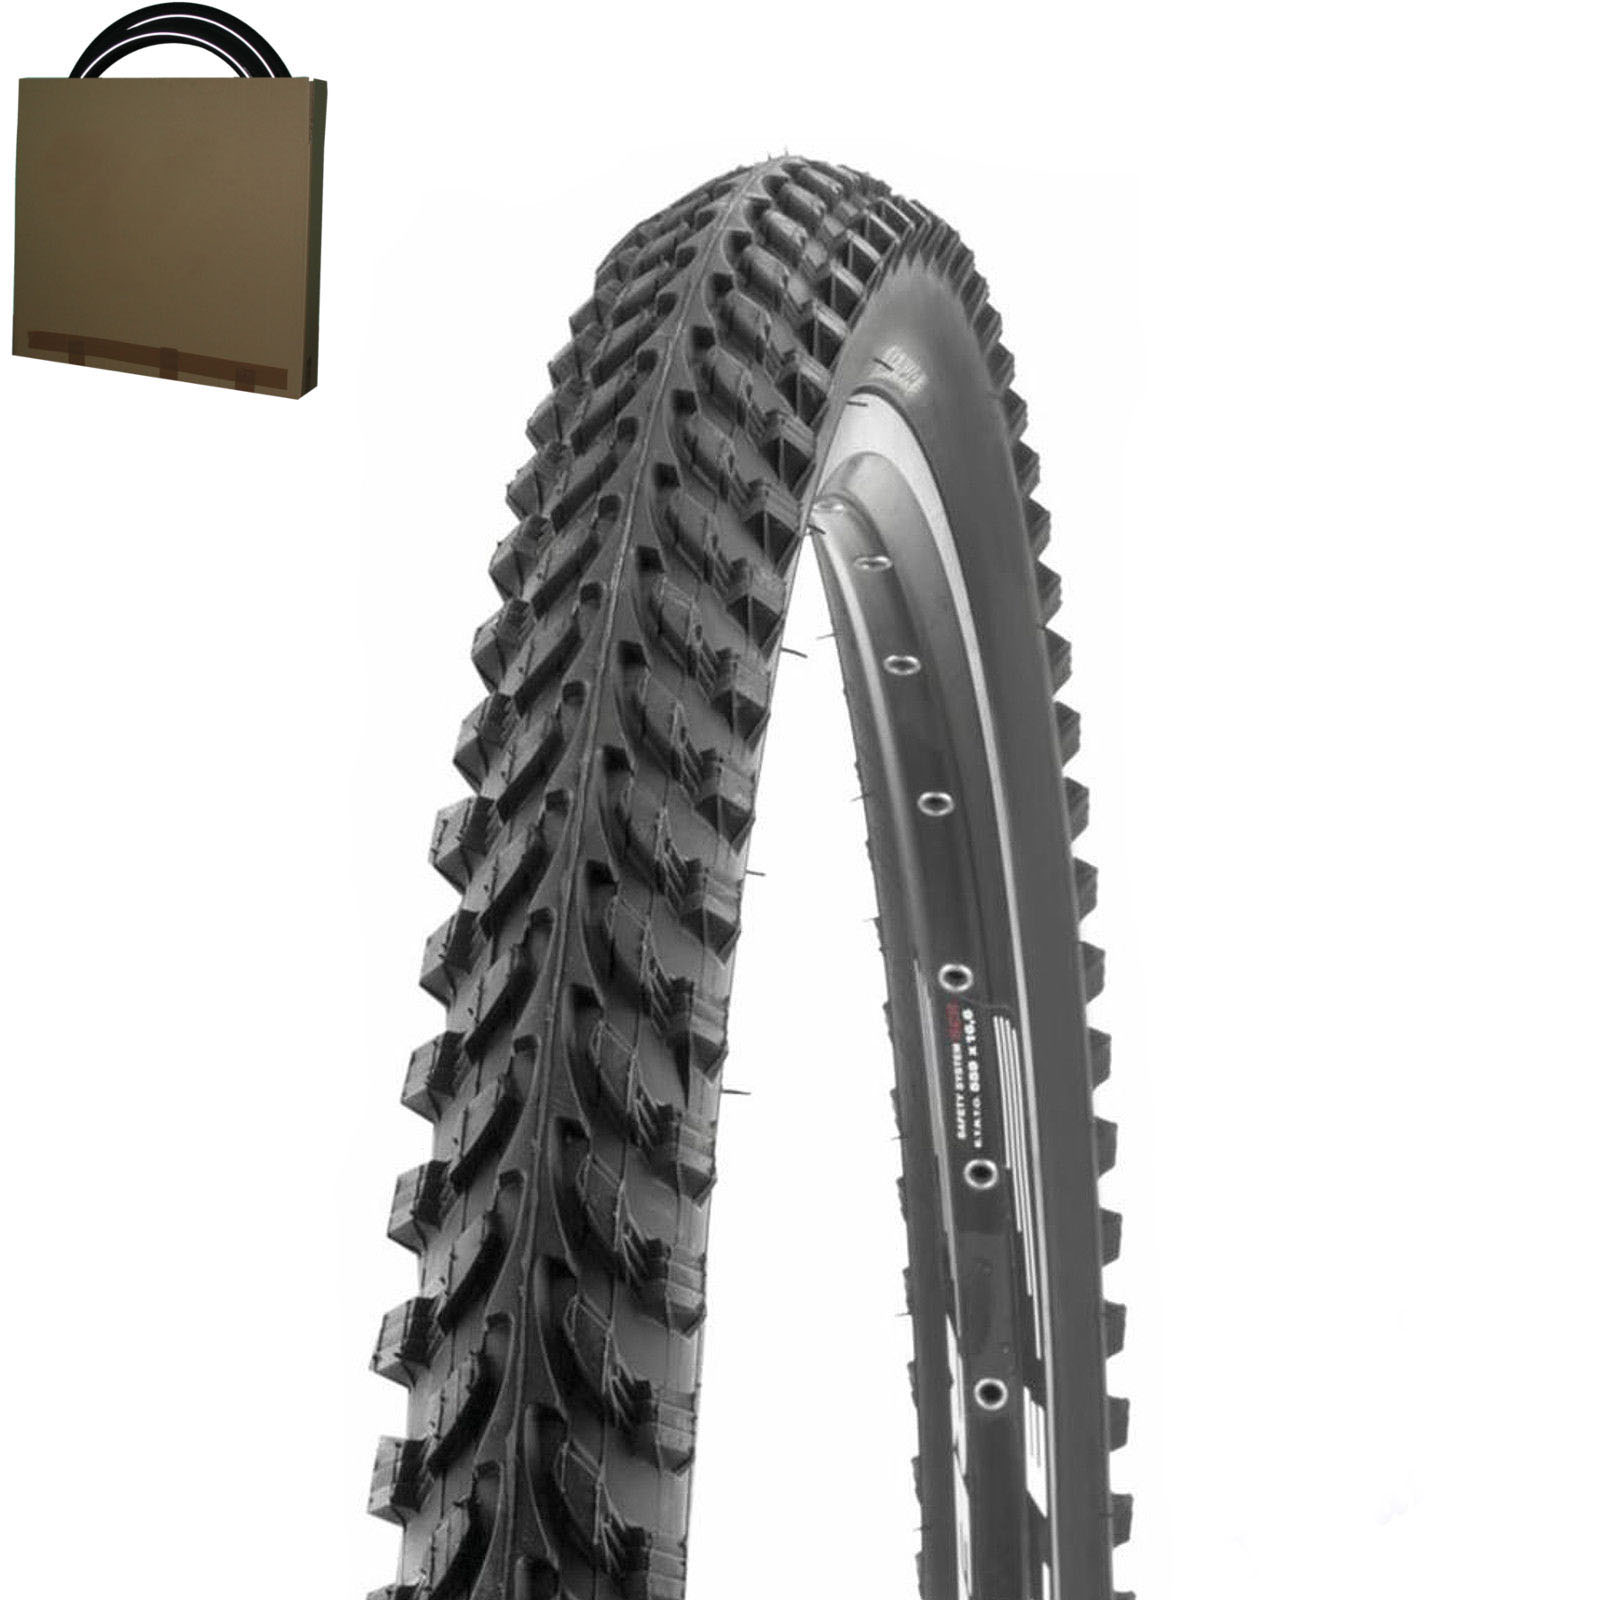 Kenda ATB Fahrrad Reifen K-898 20x2.00 | 50-406 schwarz